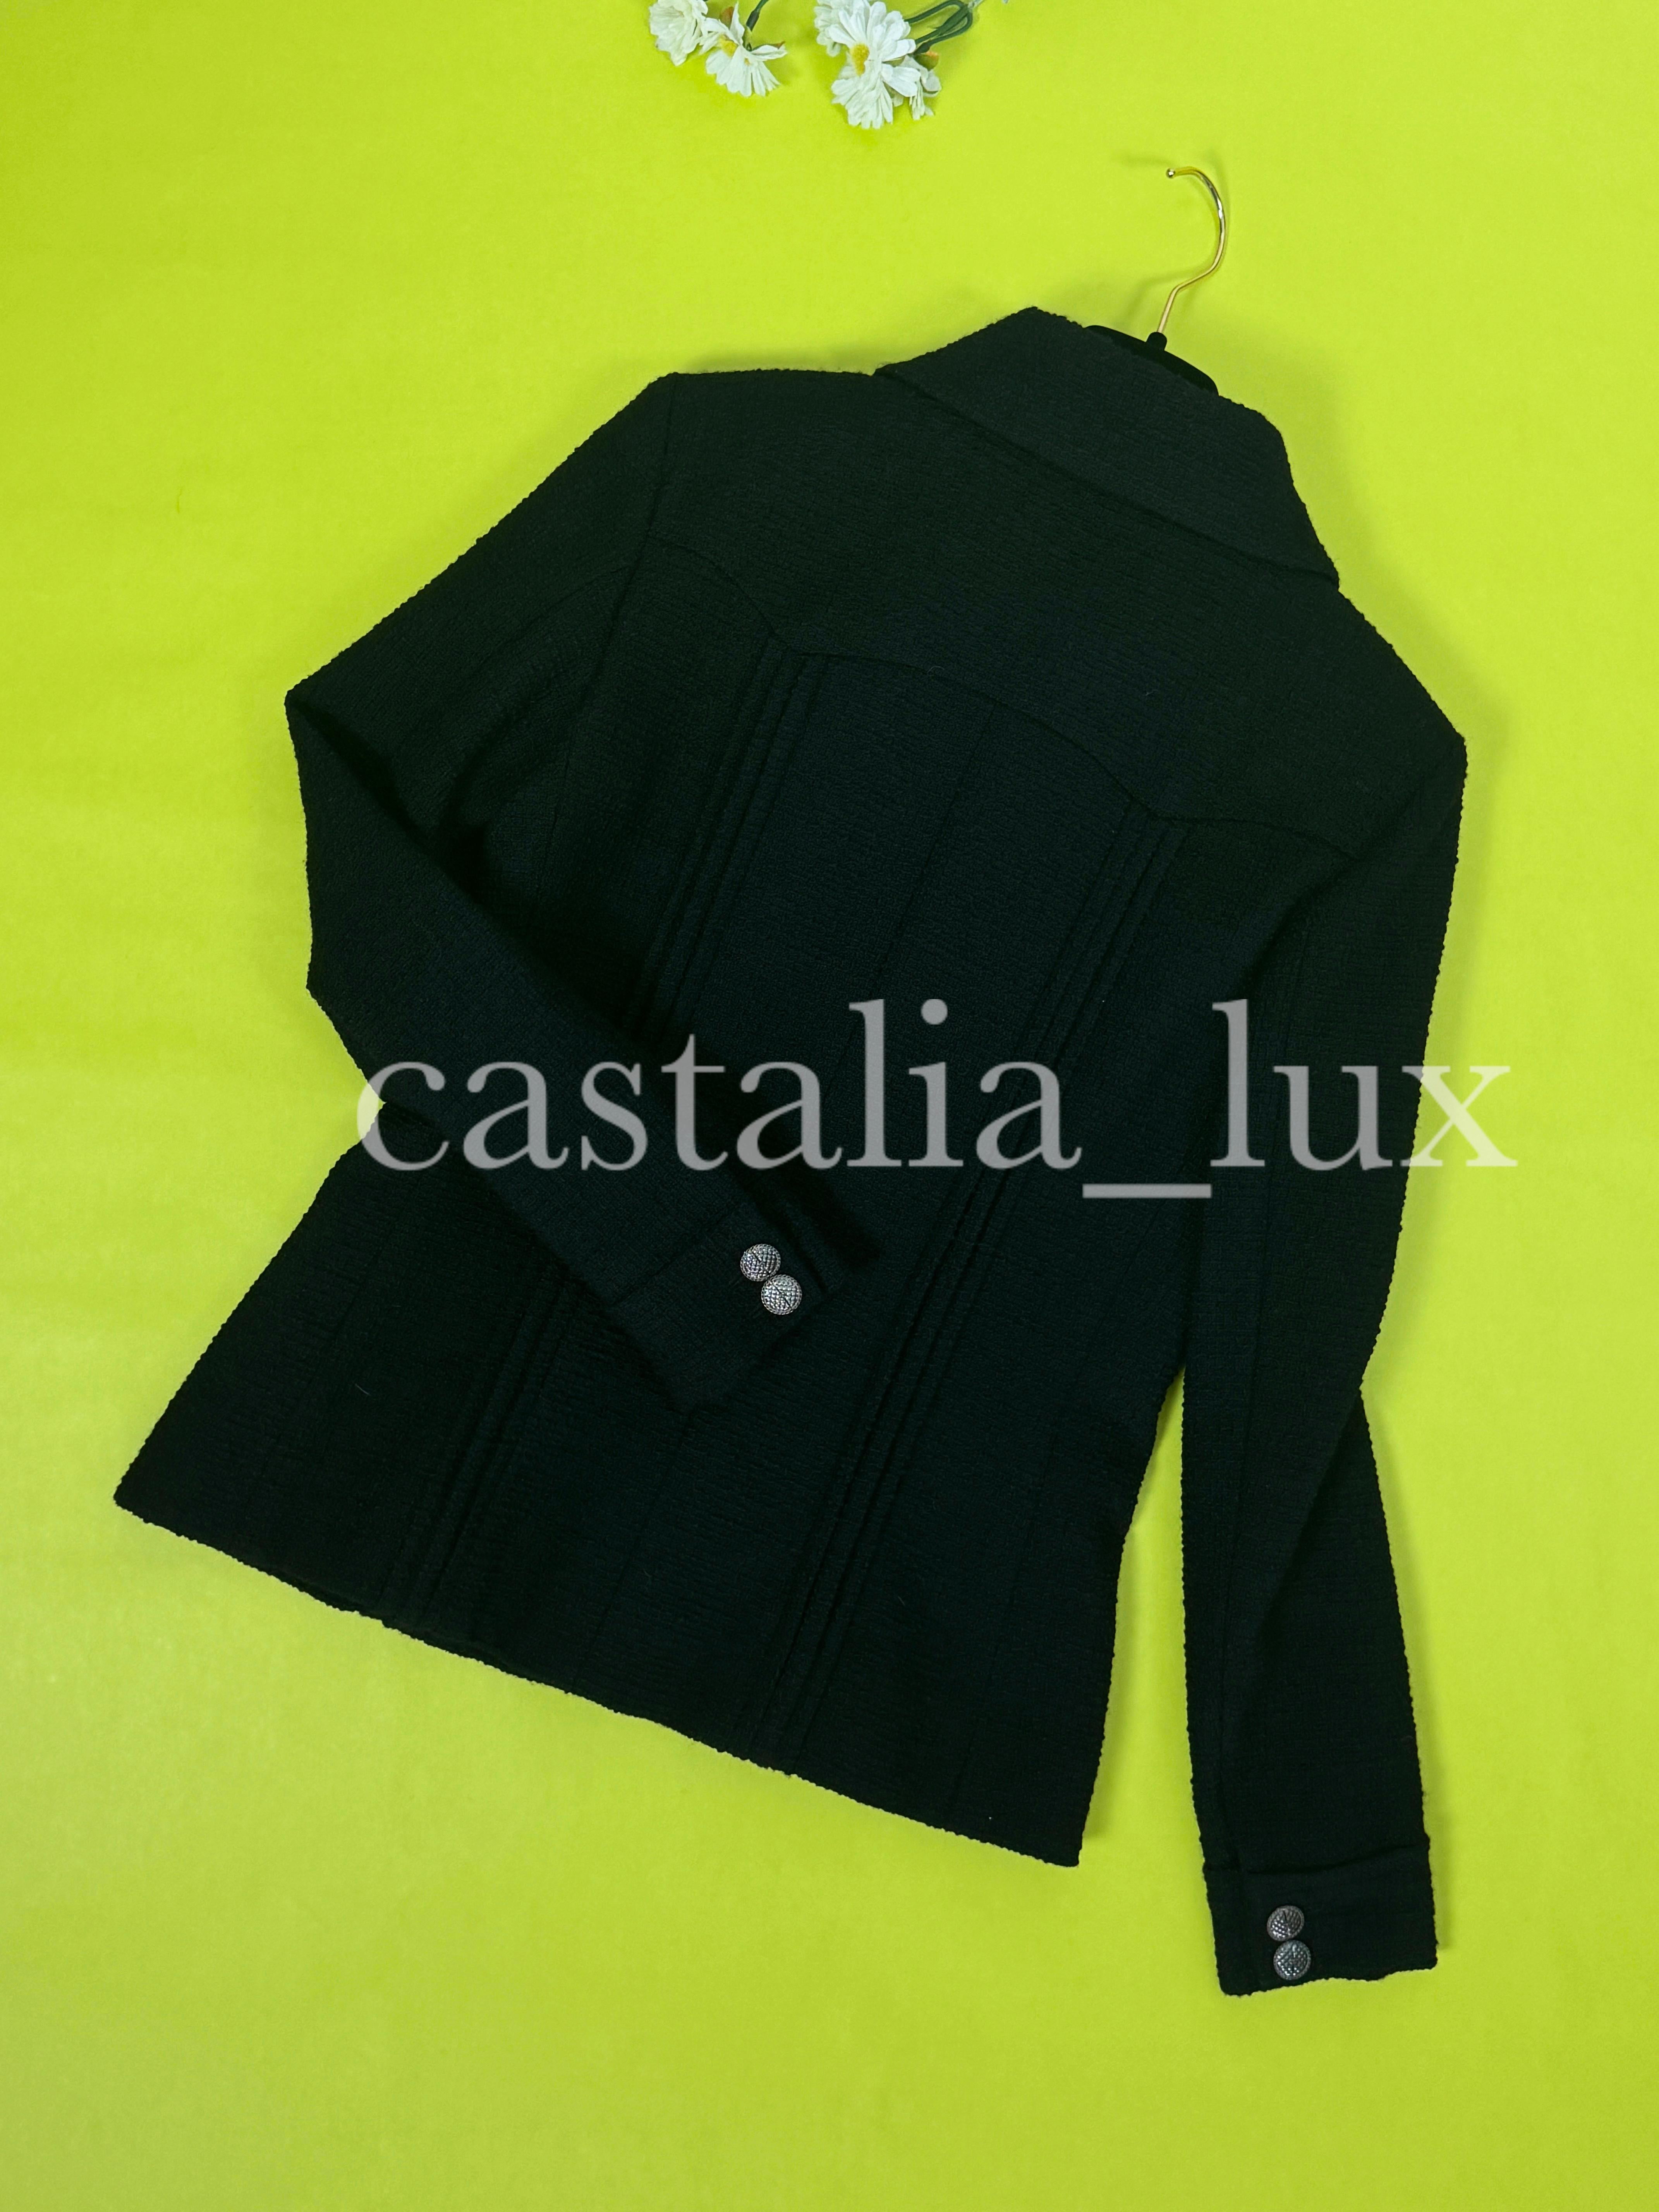 Chanel New Paris / Cuba Black Tweed Jacket  For Sale 15